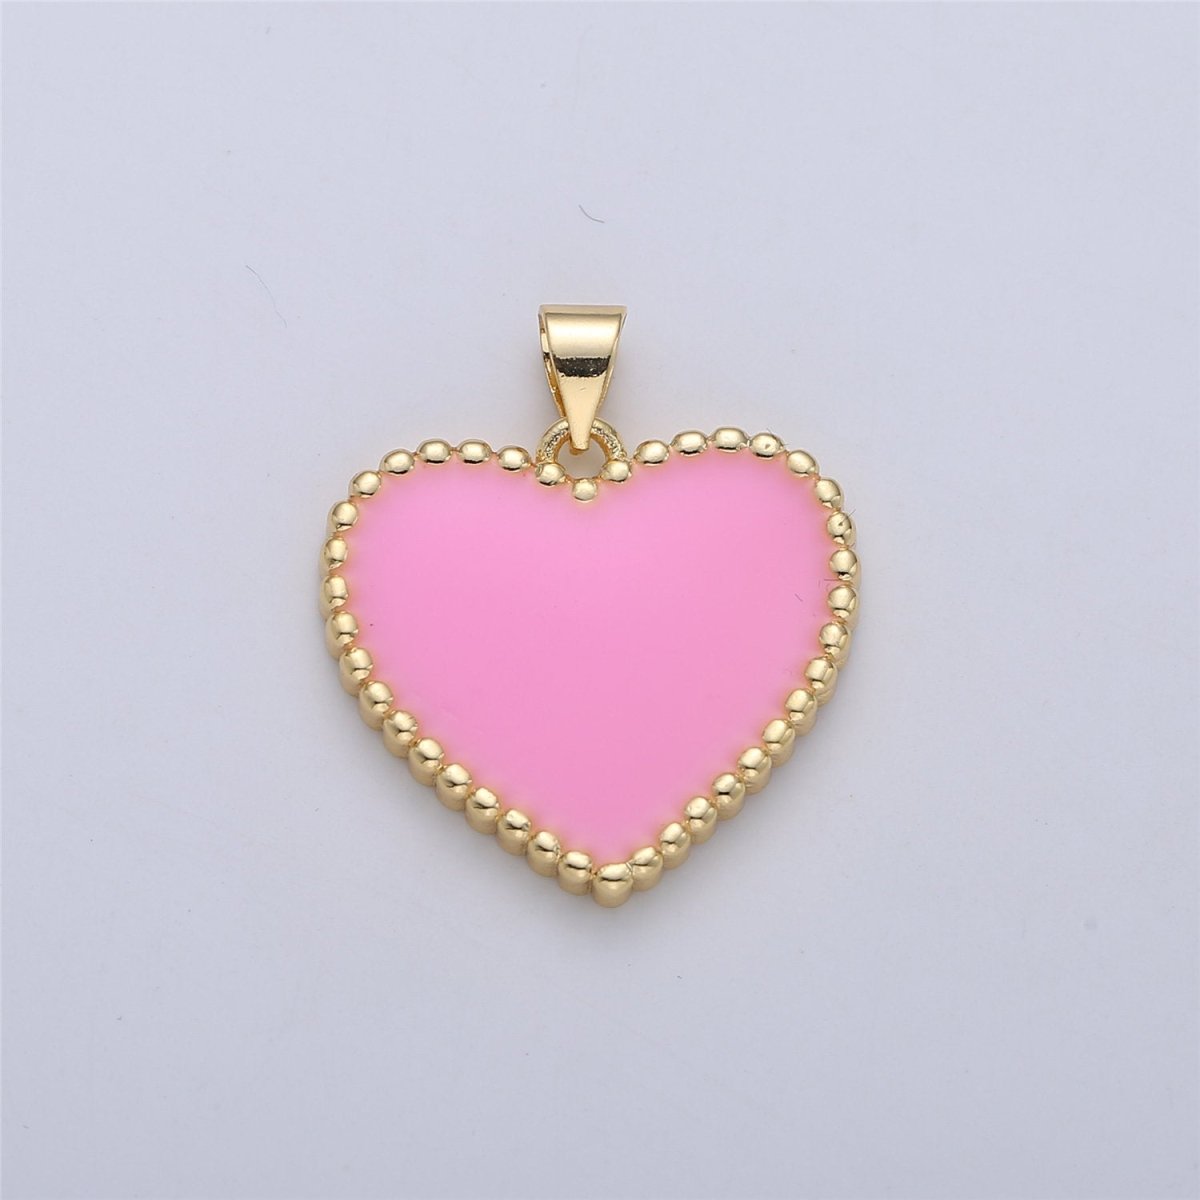 Red Pink Enamel Heart Pendant Charm, Enamel Heart Charm, Heart Pendant, Dainty Heart Necklace Pendant I-167 - DLUXCA